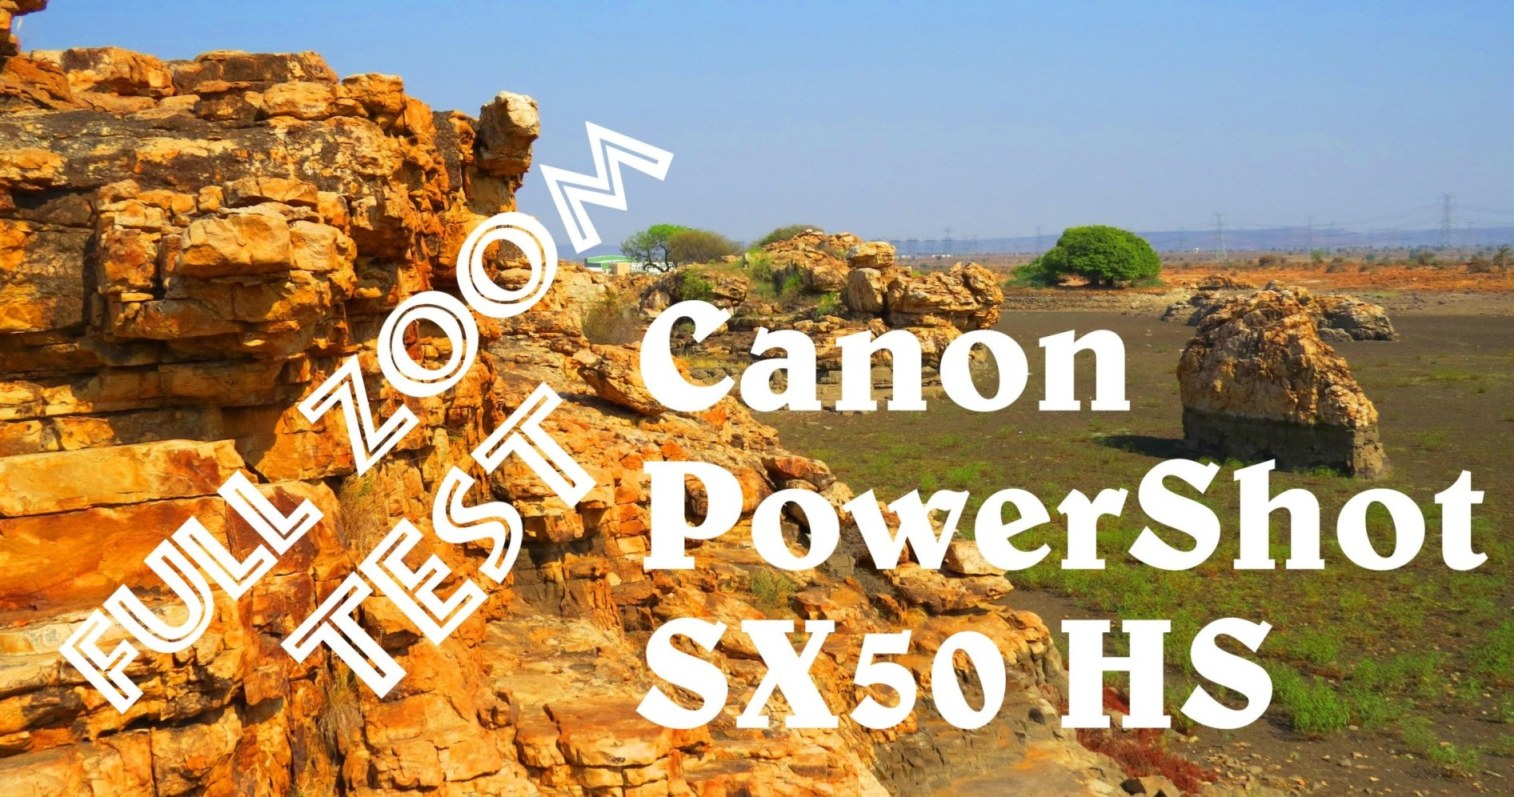  Canon PowerShot SX50 HS Full ZOOM test